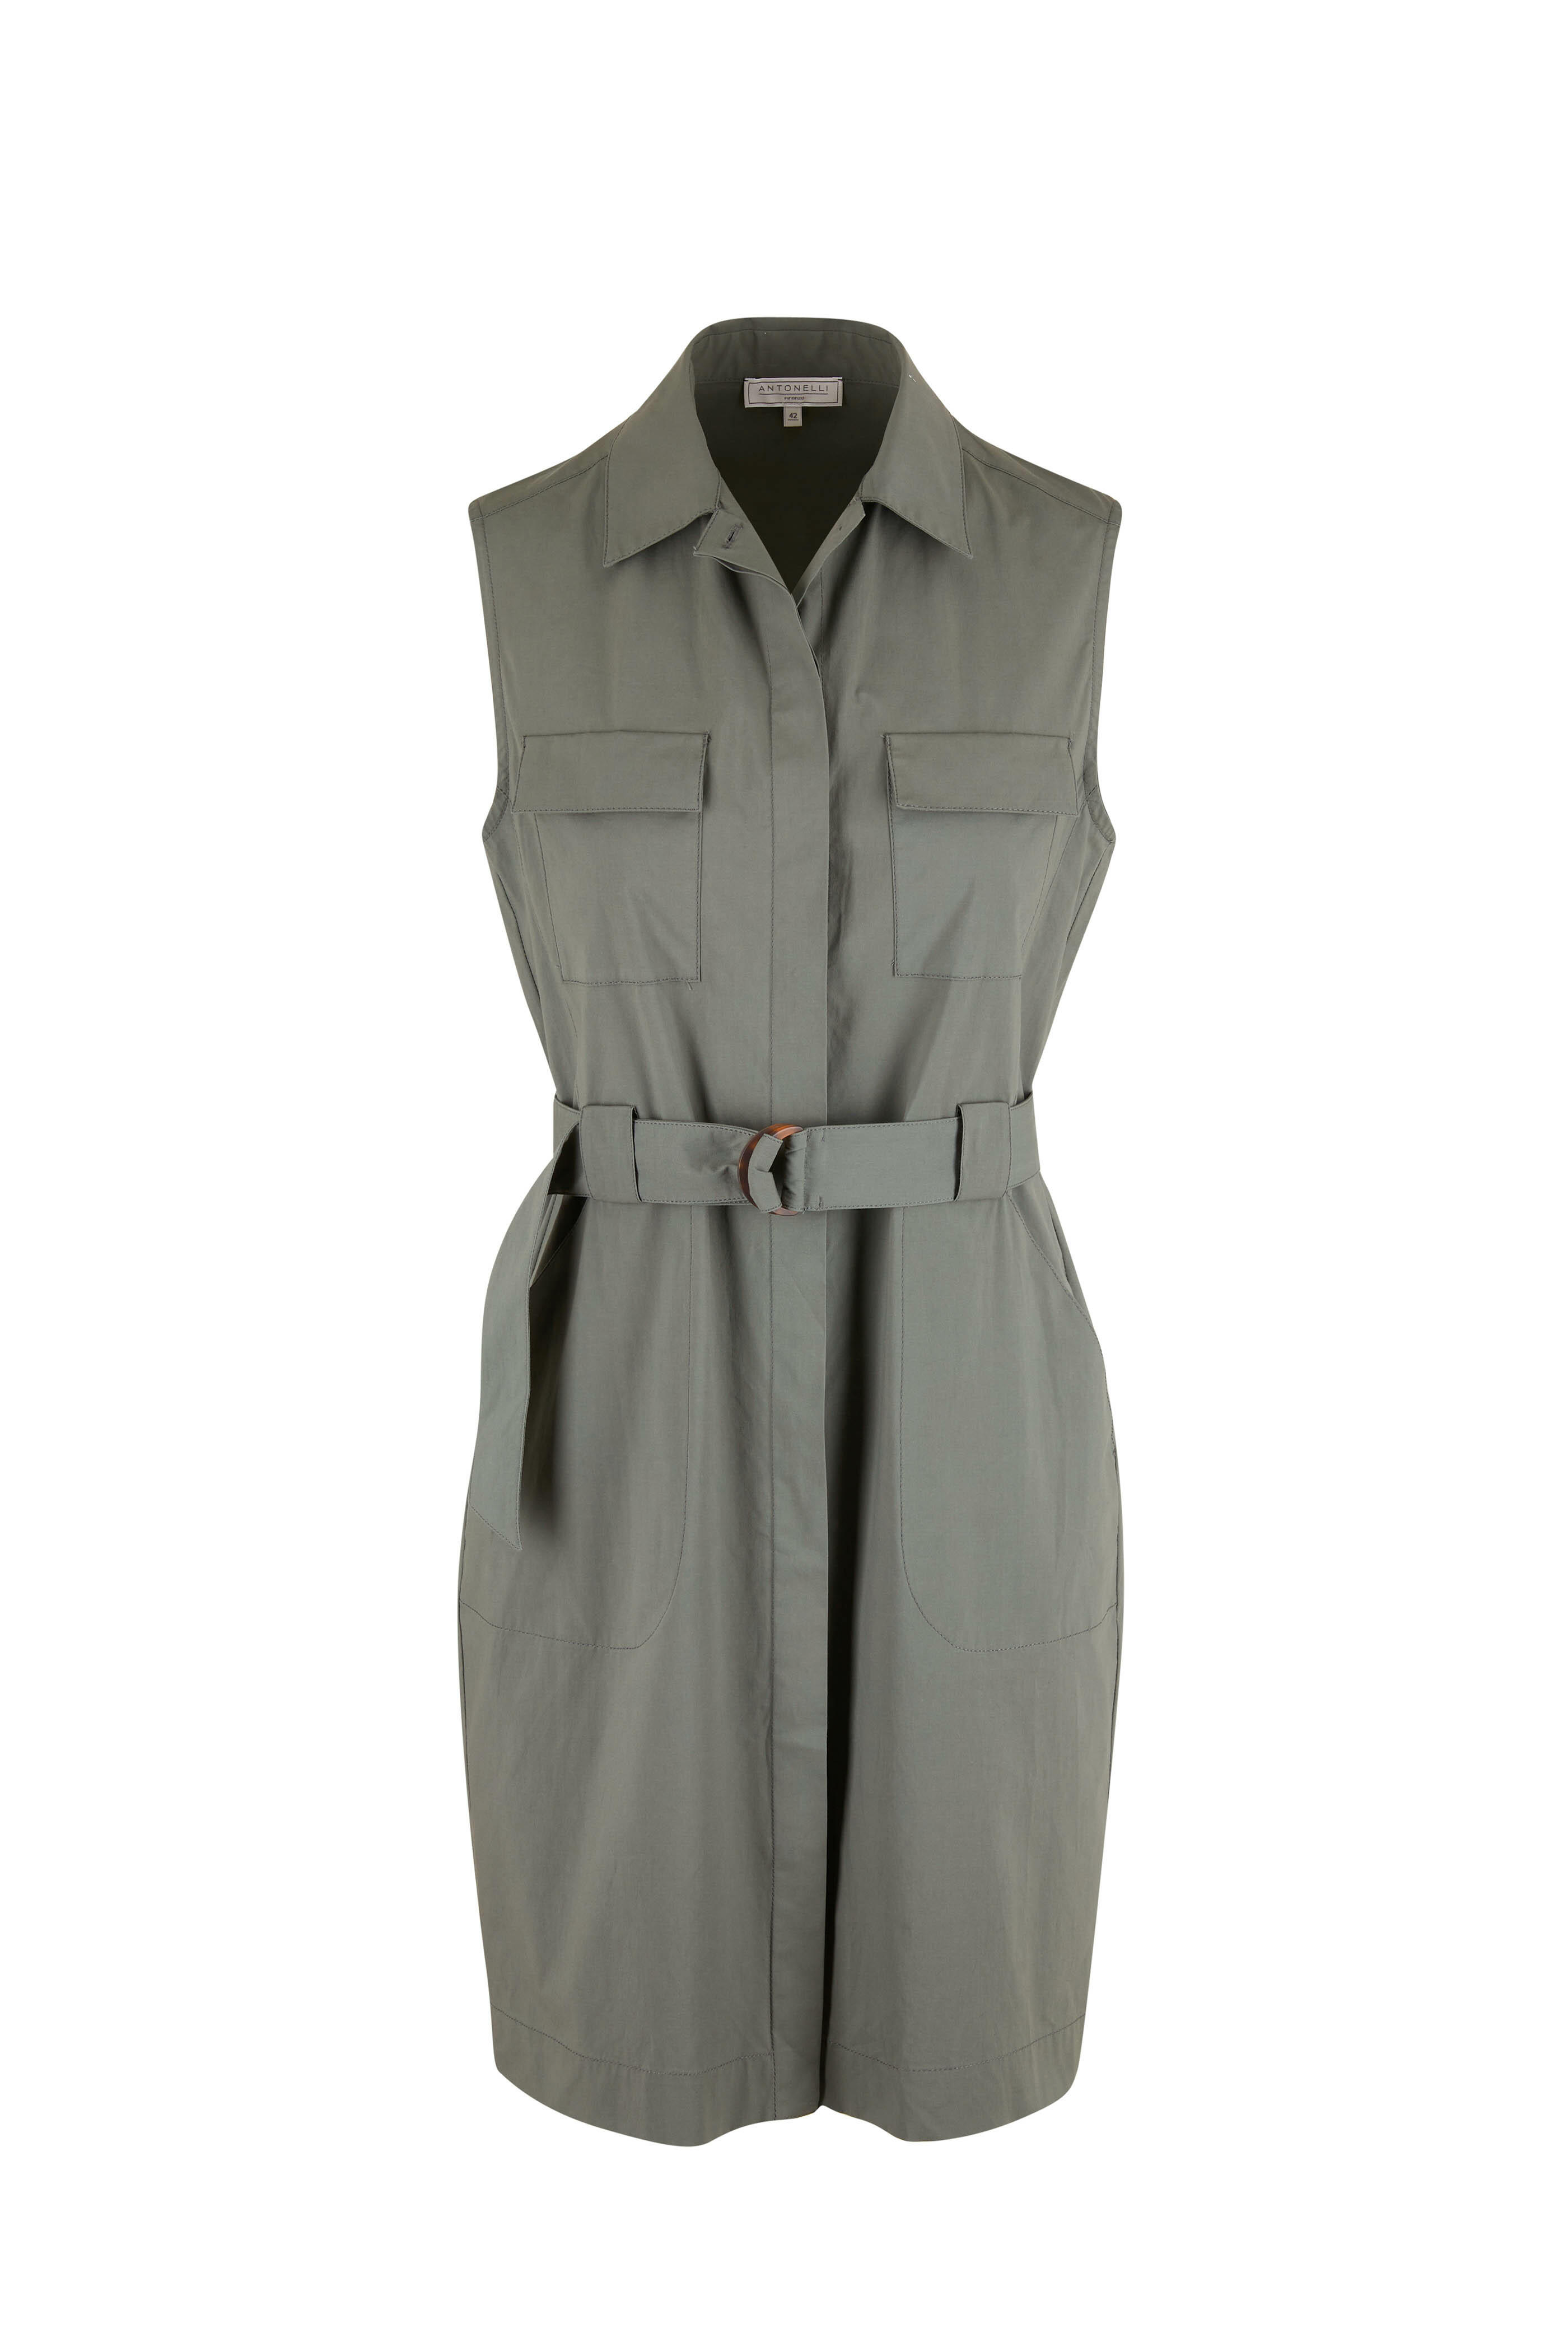 Antonelli - Norman Black Olive Sleeveless Dress | Mitchell Stores